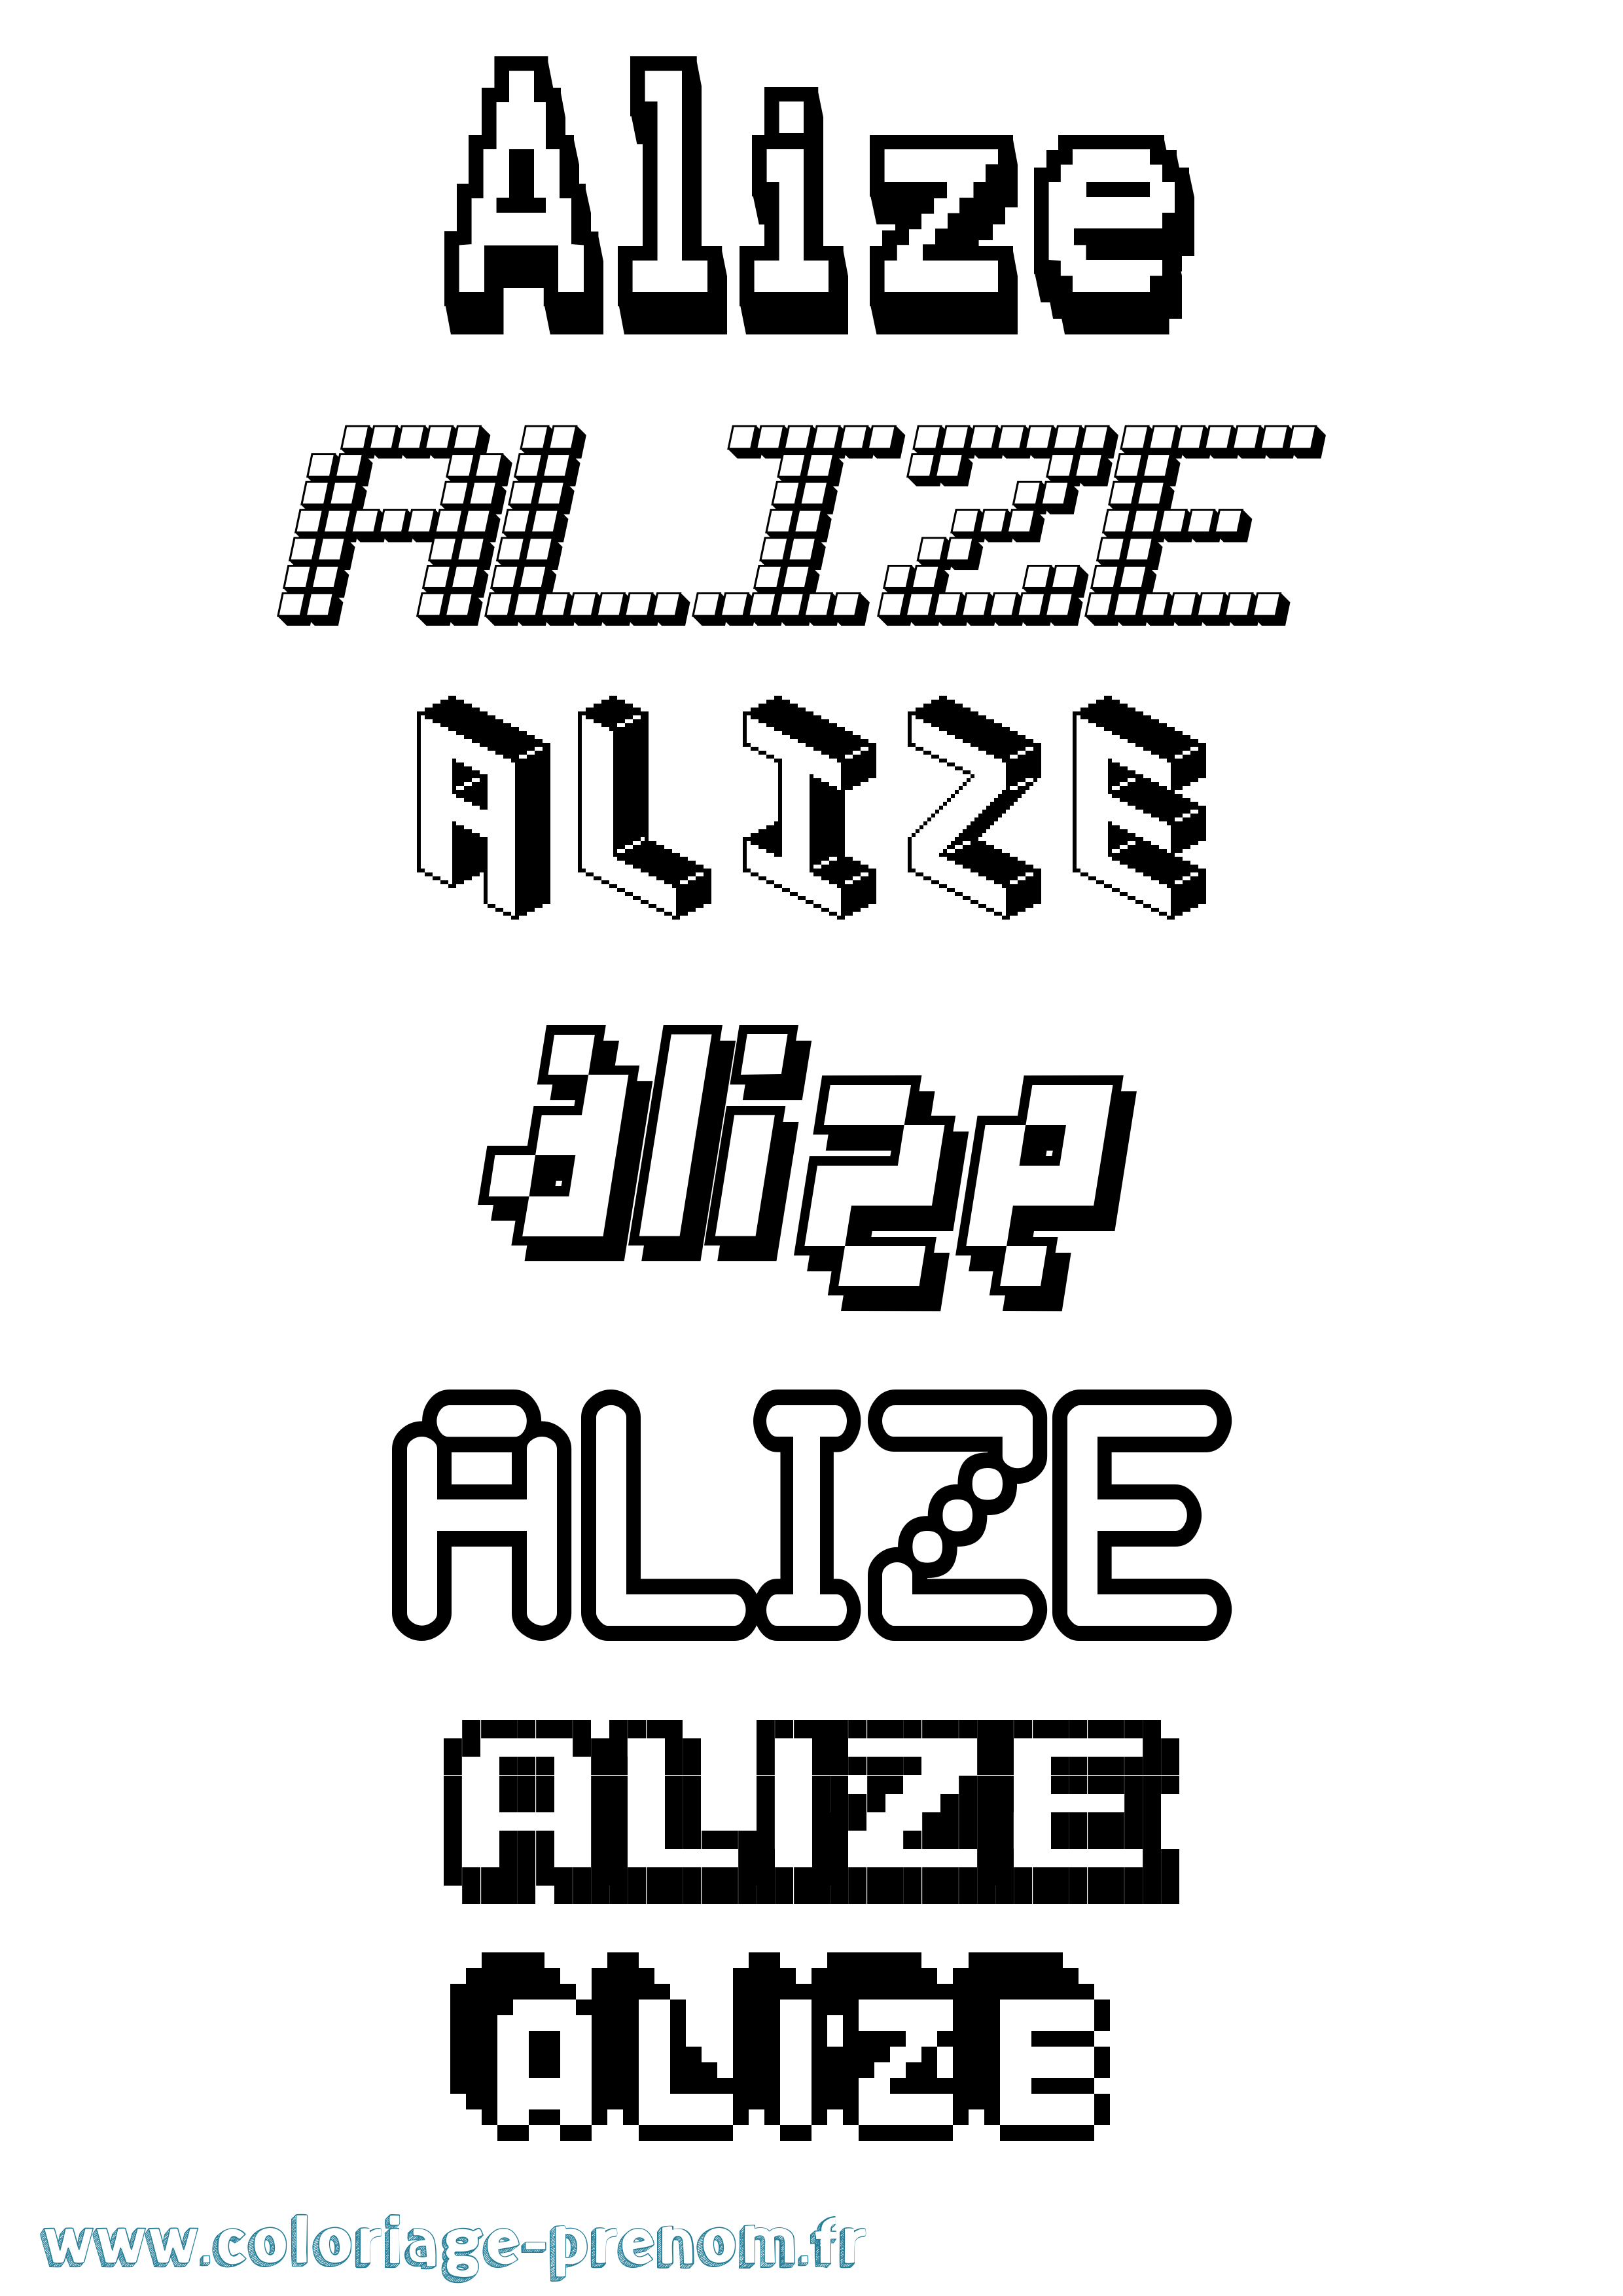 Coloriage prénom Alize Pixel